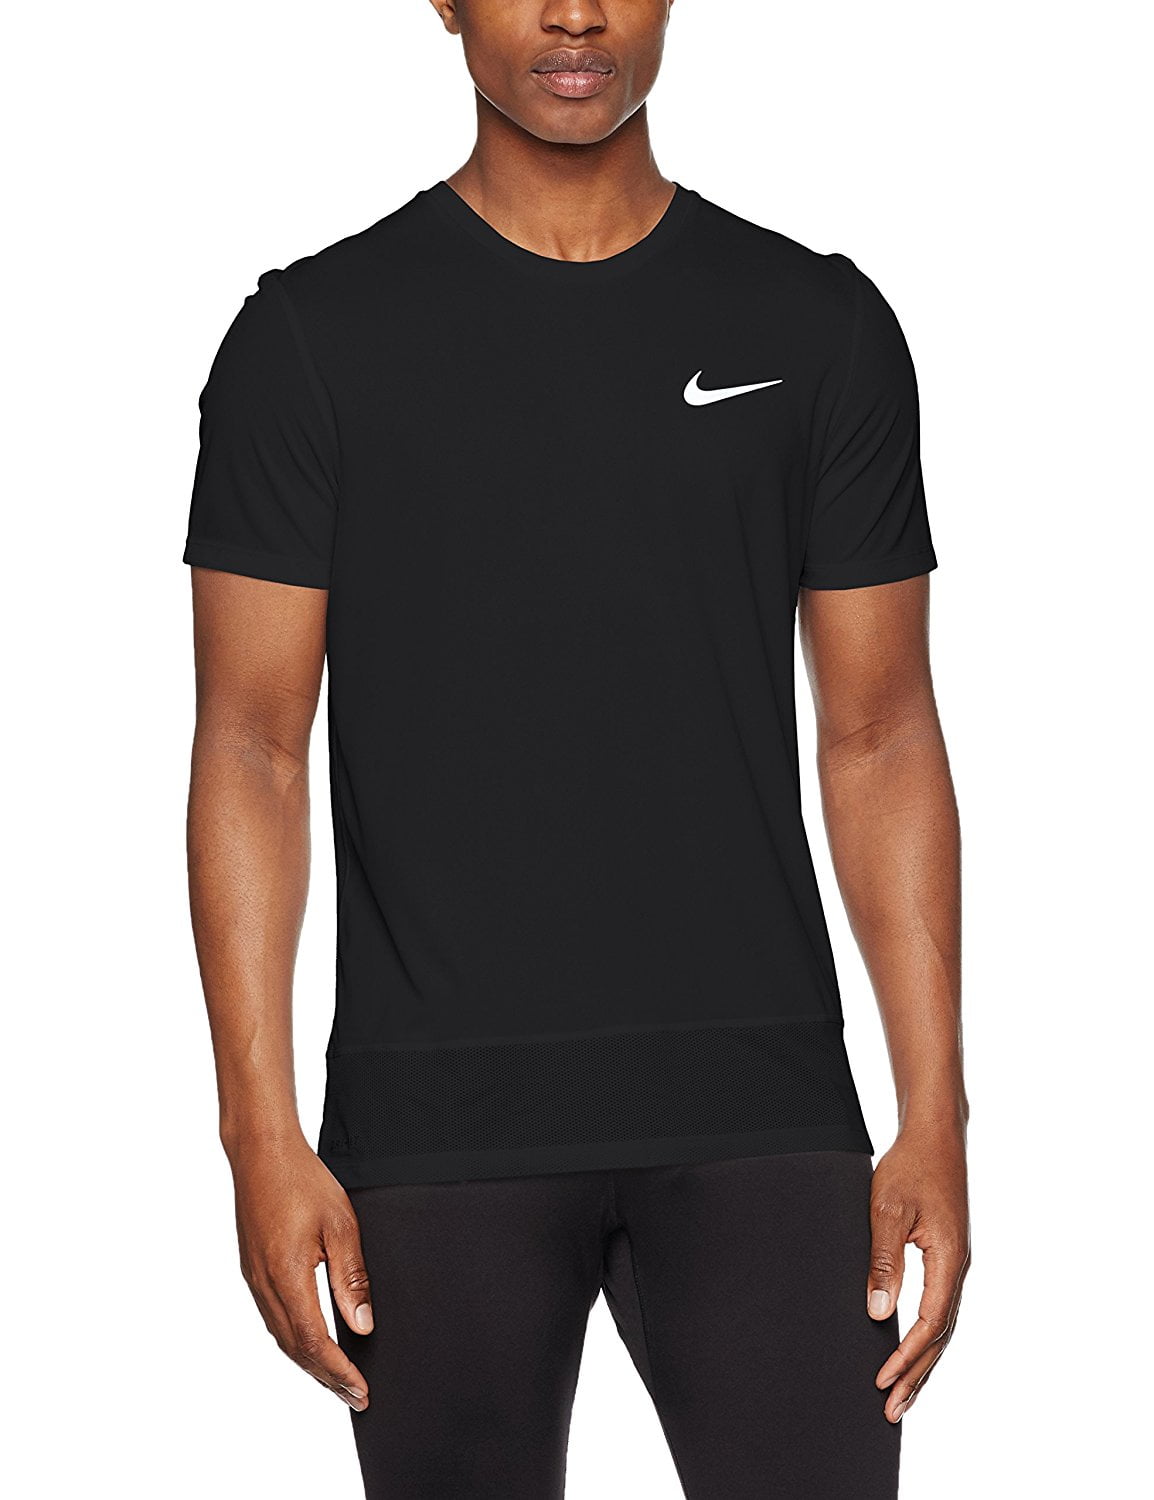 Nike - Nike Men's Breathe Rapid Challenger Running T-Shirt - Walmart ...